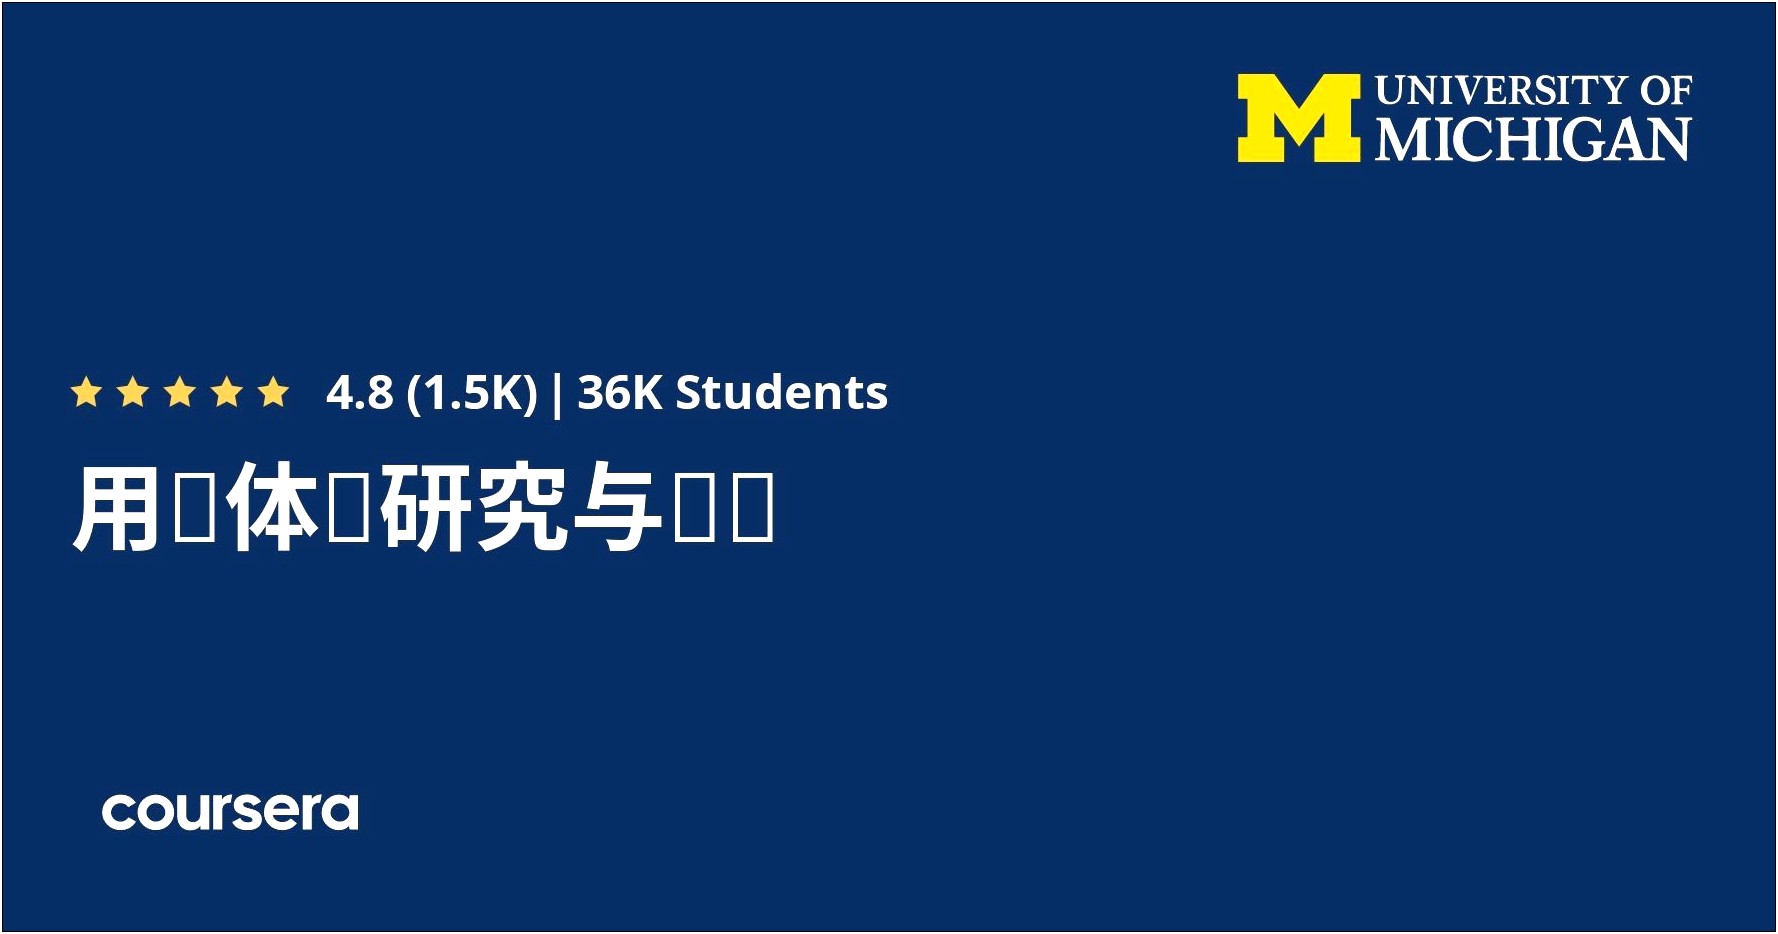 University Of Michigan Business School Resume